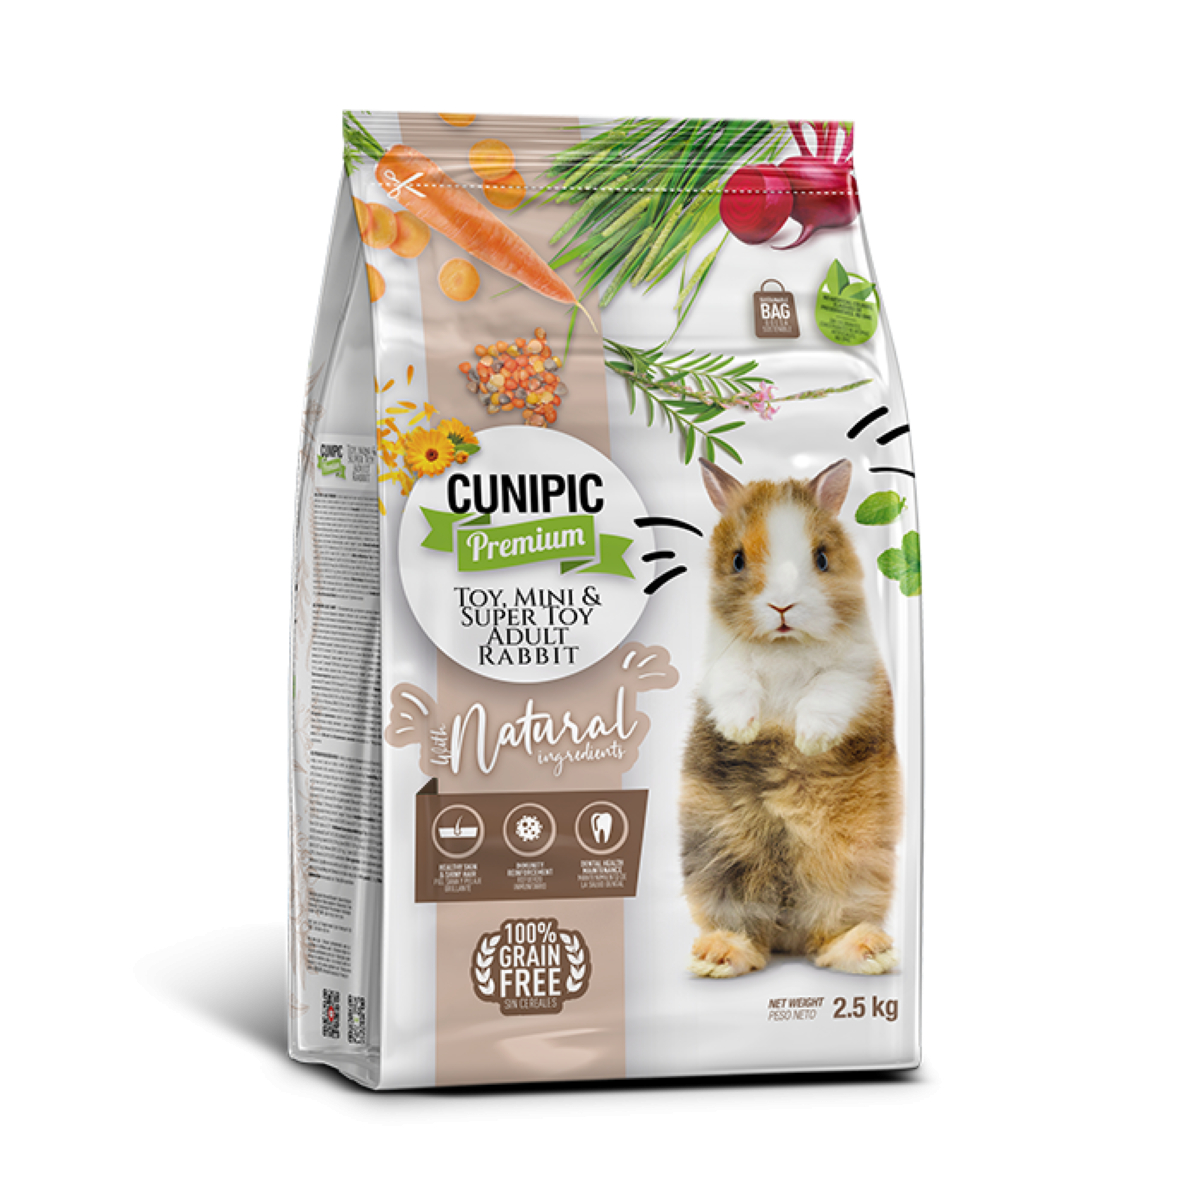 Cunipic Premium aliment pour lapin super toy adulte